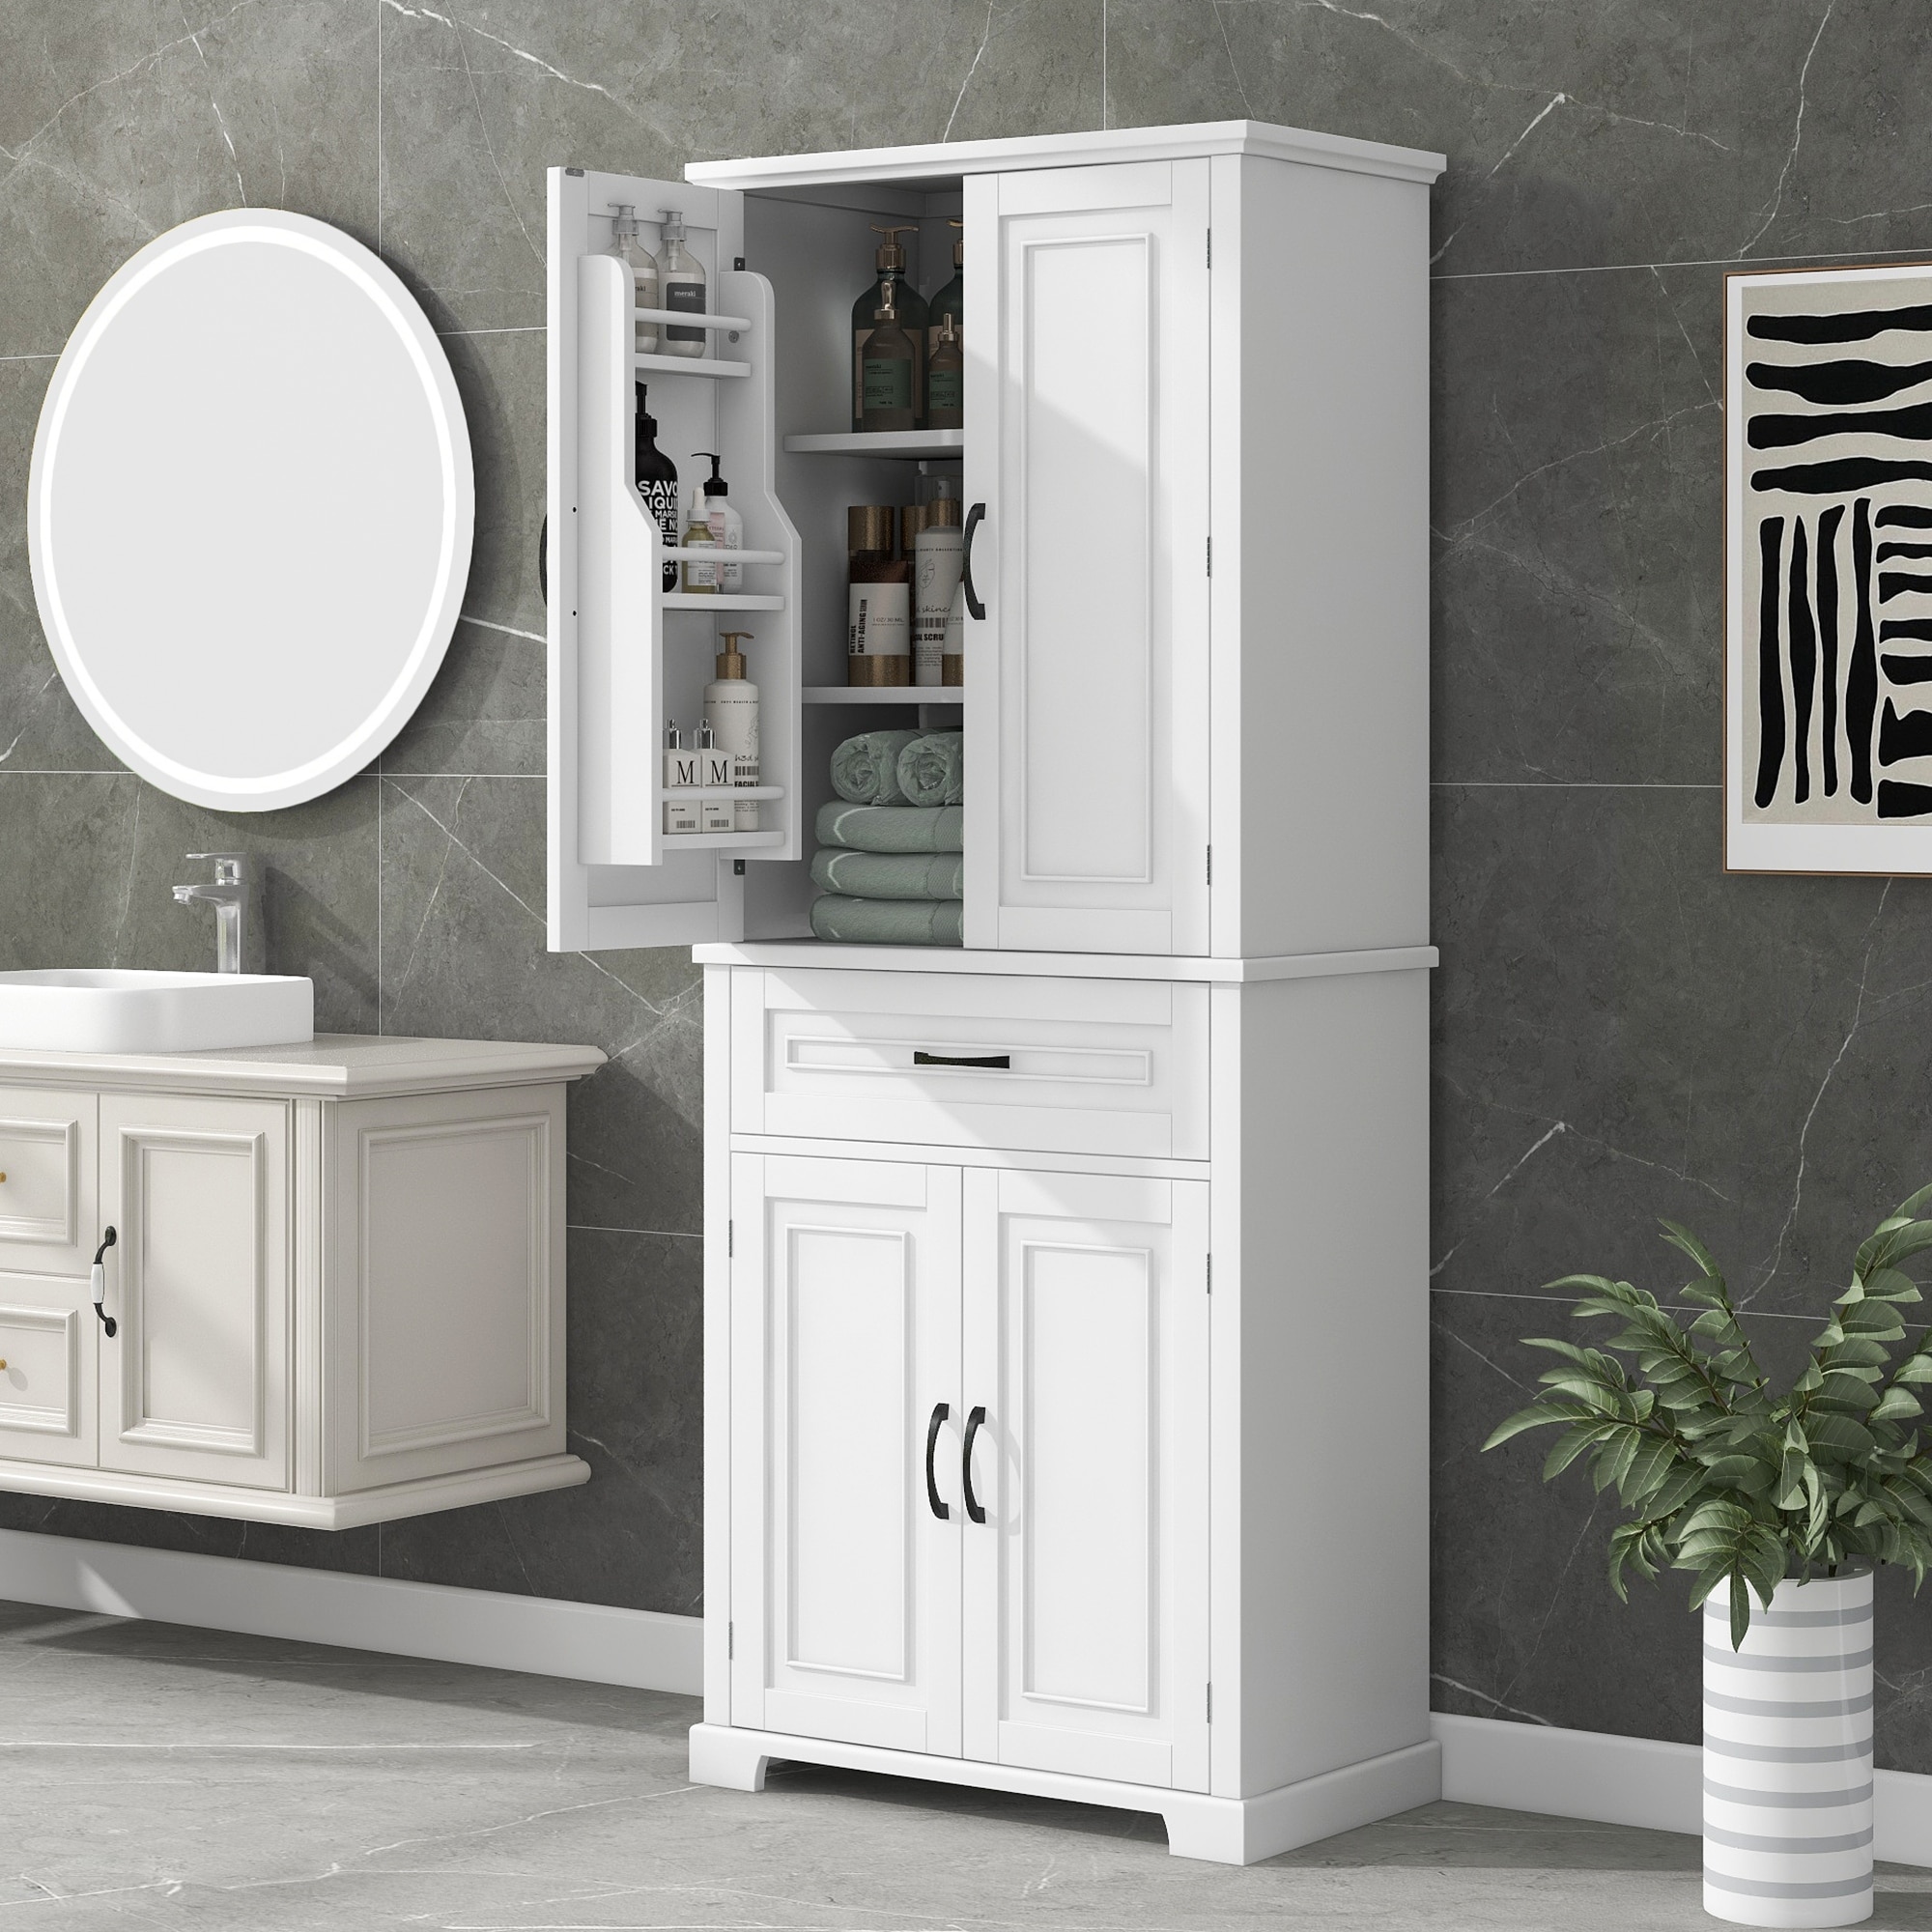 https://ak1.ostkcdn.com/images/products/is/images/direct/616102bf6ef26b077b6ac2b829aa8f7931fbb42c/Modern-White-Bathroom-Storage-Cabinet-with-4-Doors%2C-Drawer%2C-Adjustable-Shelf-and-Storage-Racks%2C-Luxury-Bathroom-Cabinet.jpg